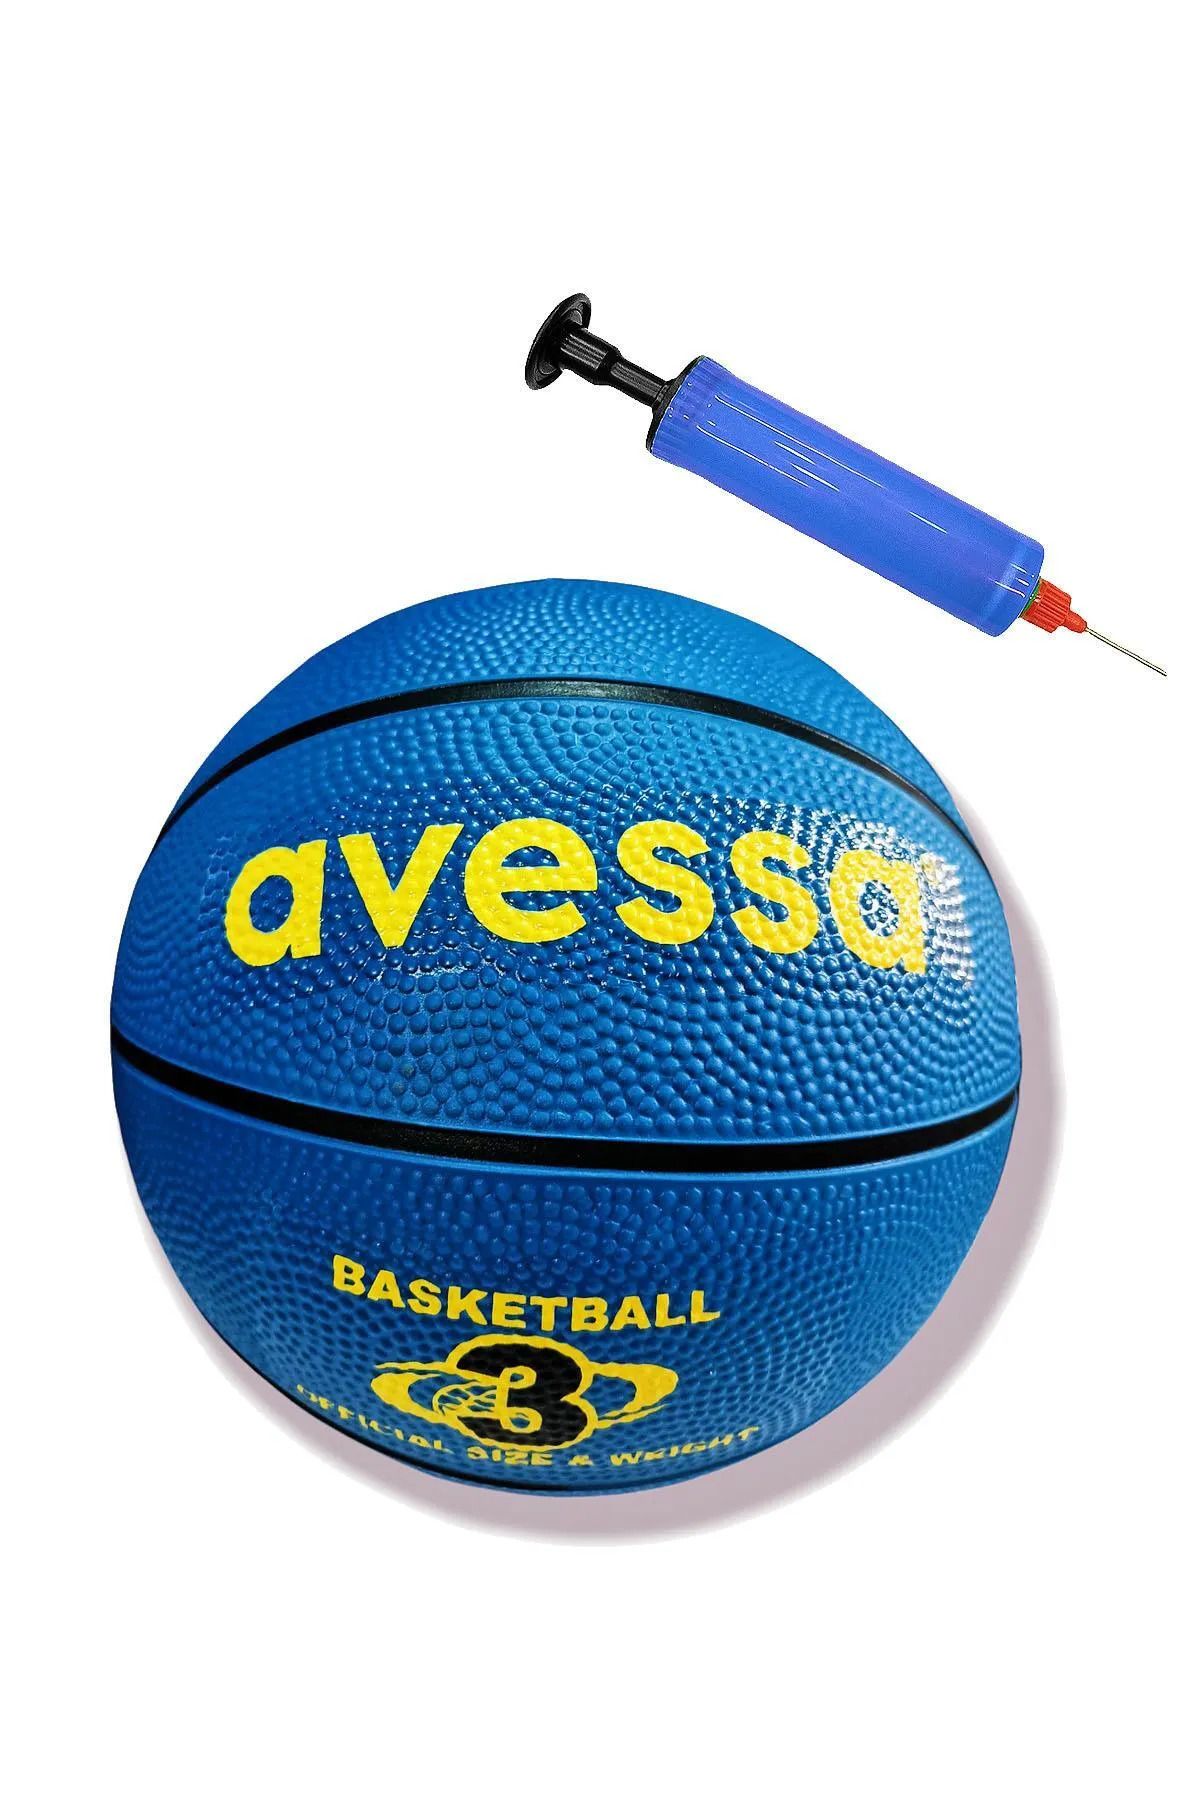 TOCSPORTS Mavi Basketbol Topu - No 3 - 280 Gram - Pompa Dahil